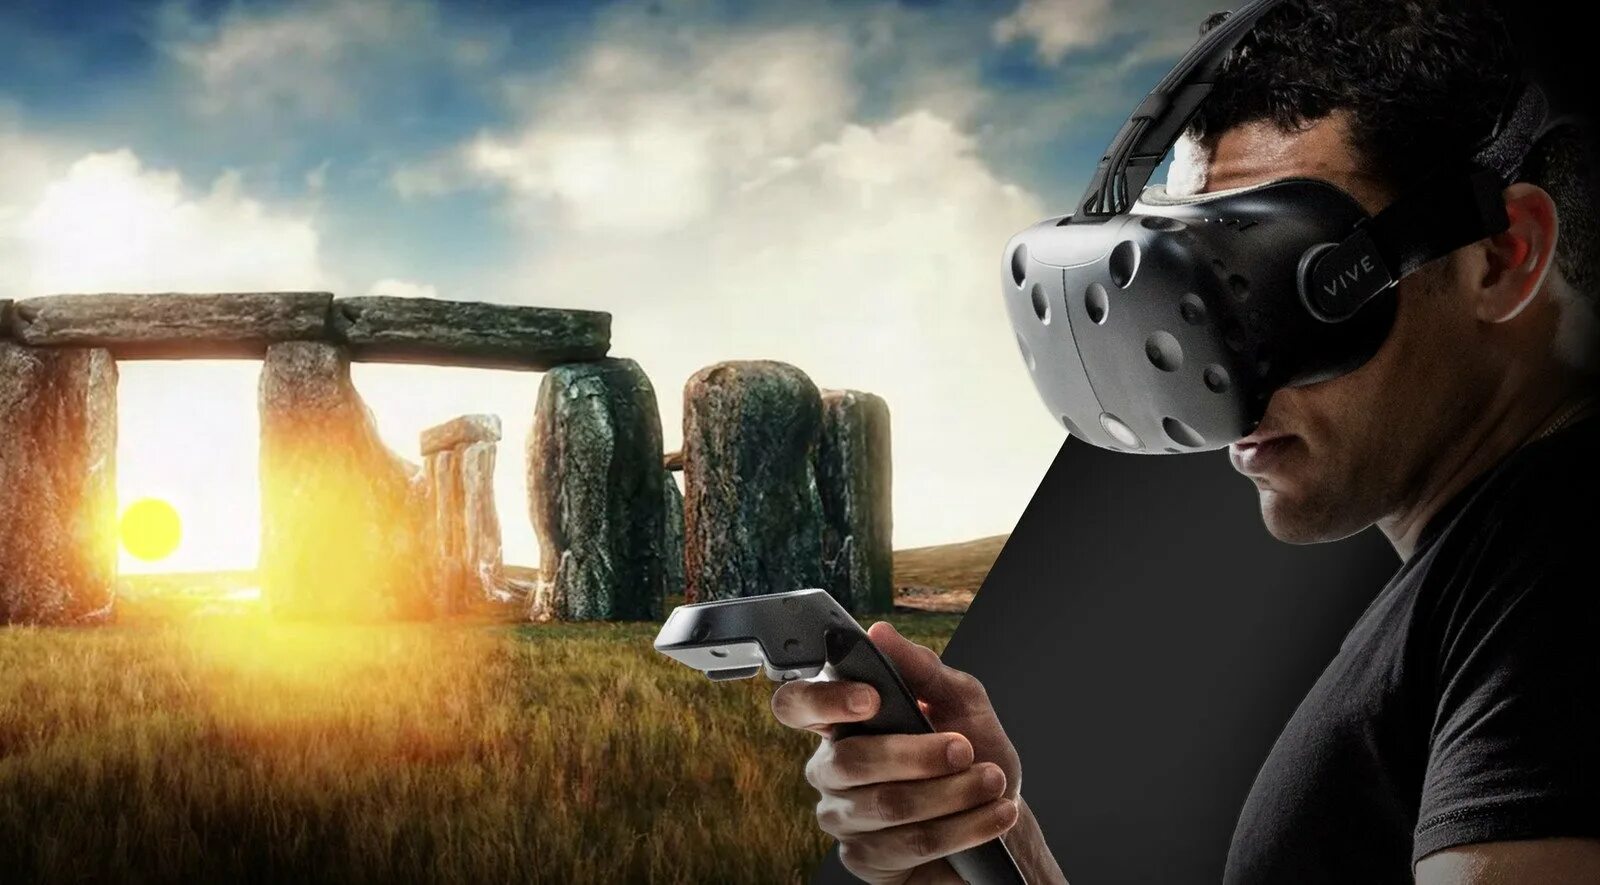 Vr реклама. VR аттракцион Окулус 2. Реклама очков виртуальной реальности. Мир виртуальной реальности. Виртуальные очки Vive.